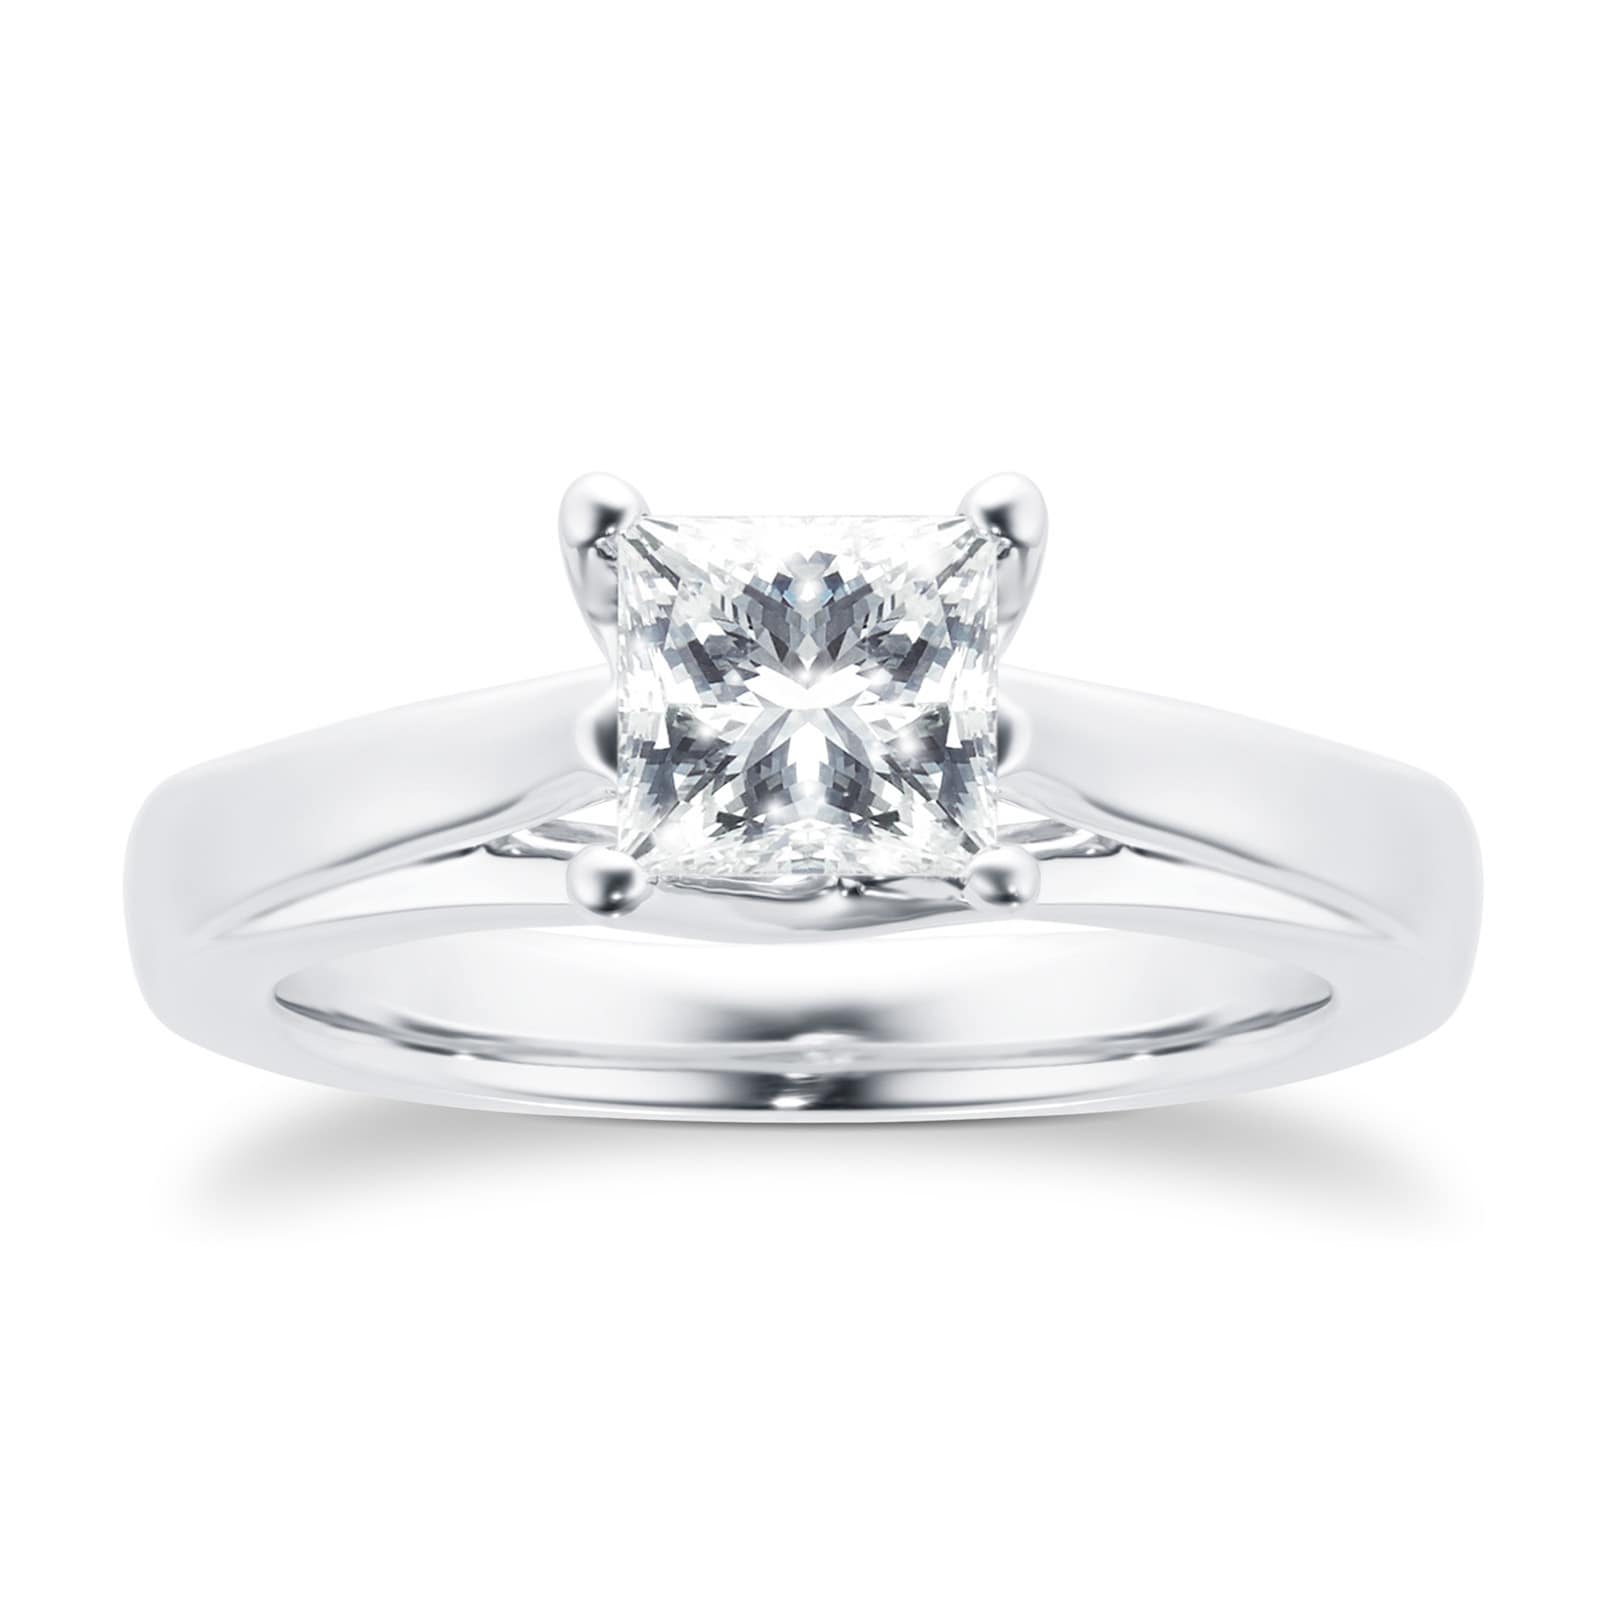 Platinum Princess Cut 1.00 Carat 88 Facet Diamond Ring - Ring Size Q